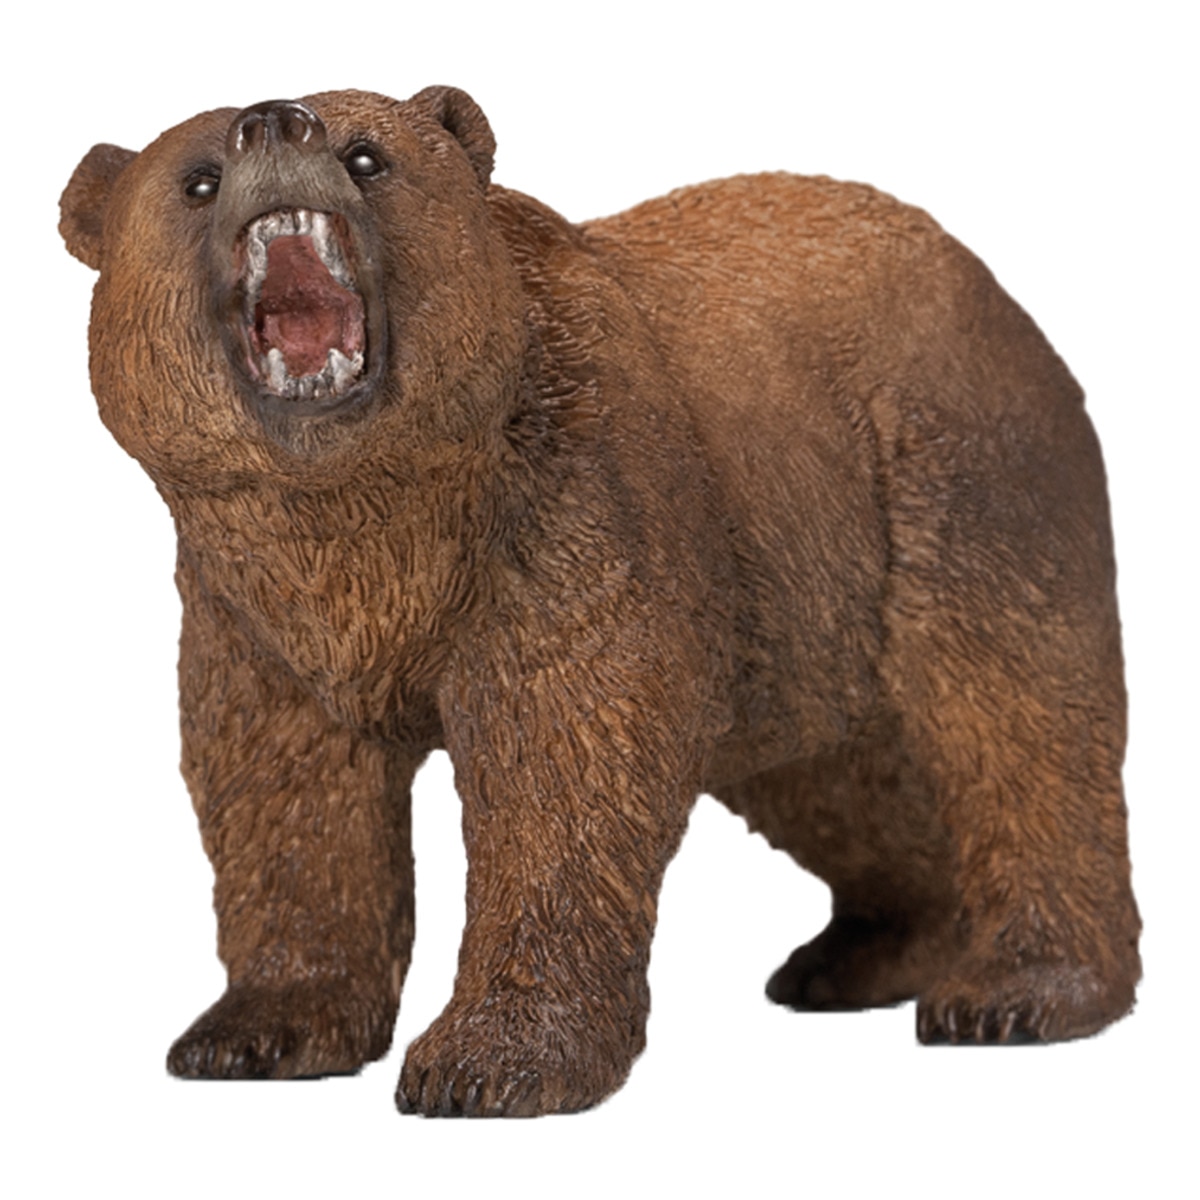 Schleich - Figura Oso Grizzly